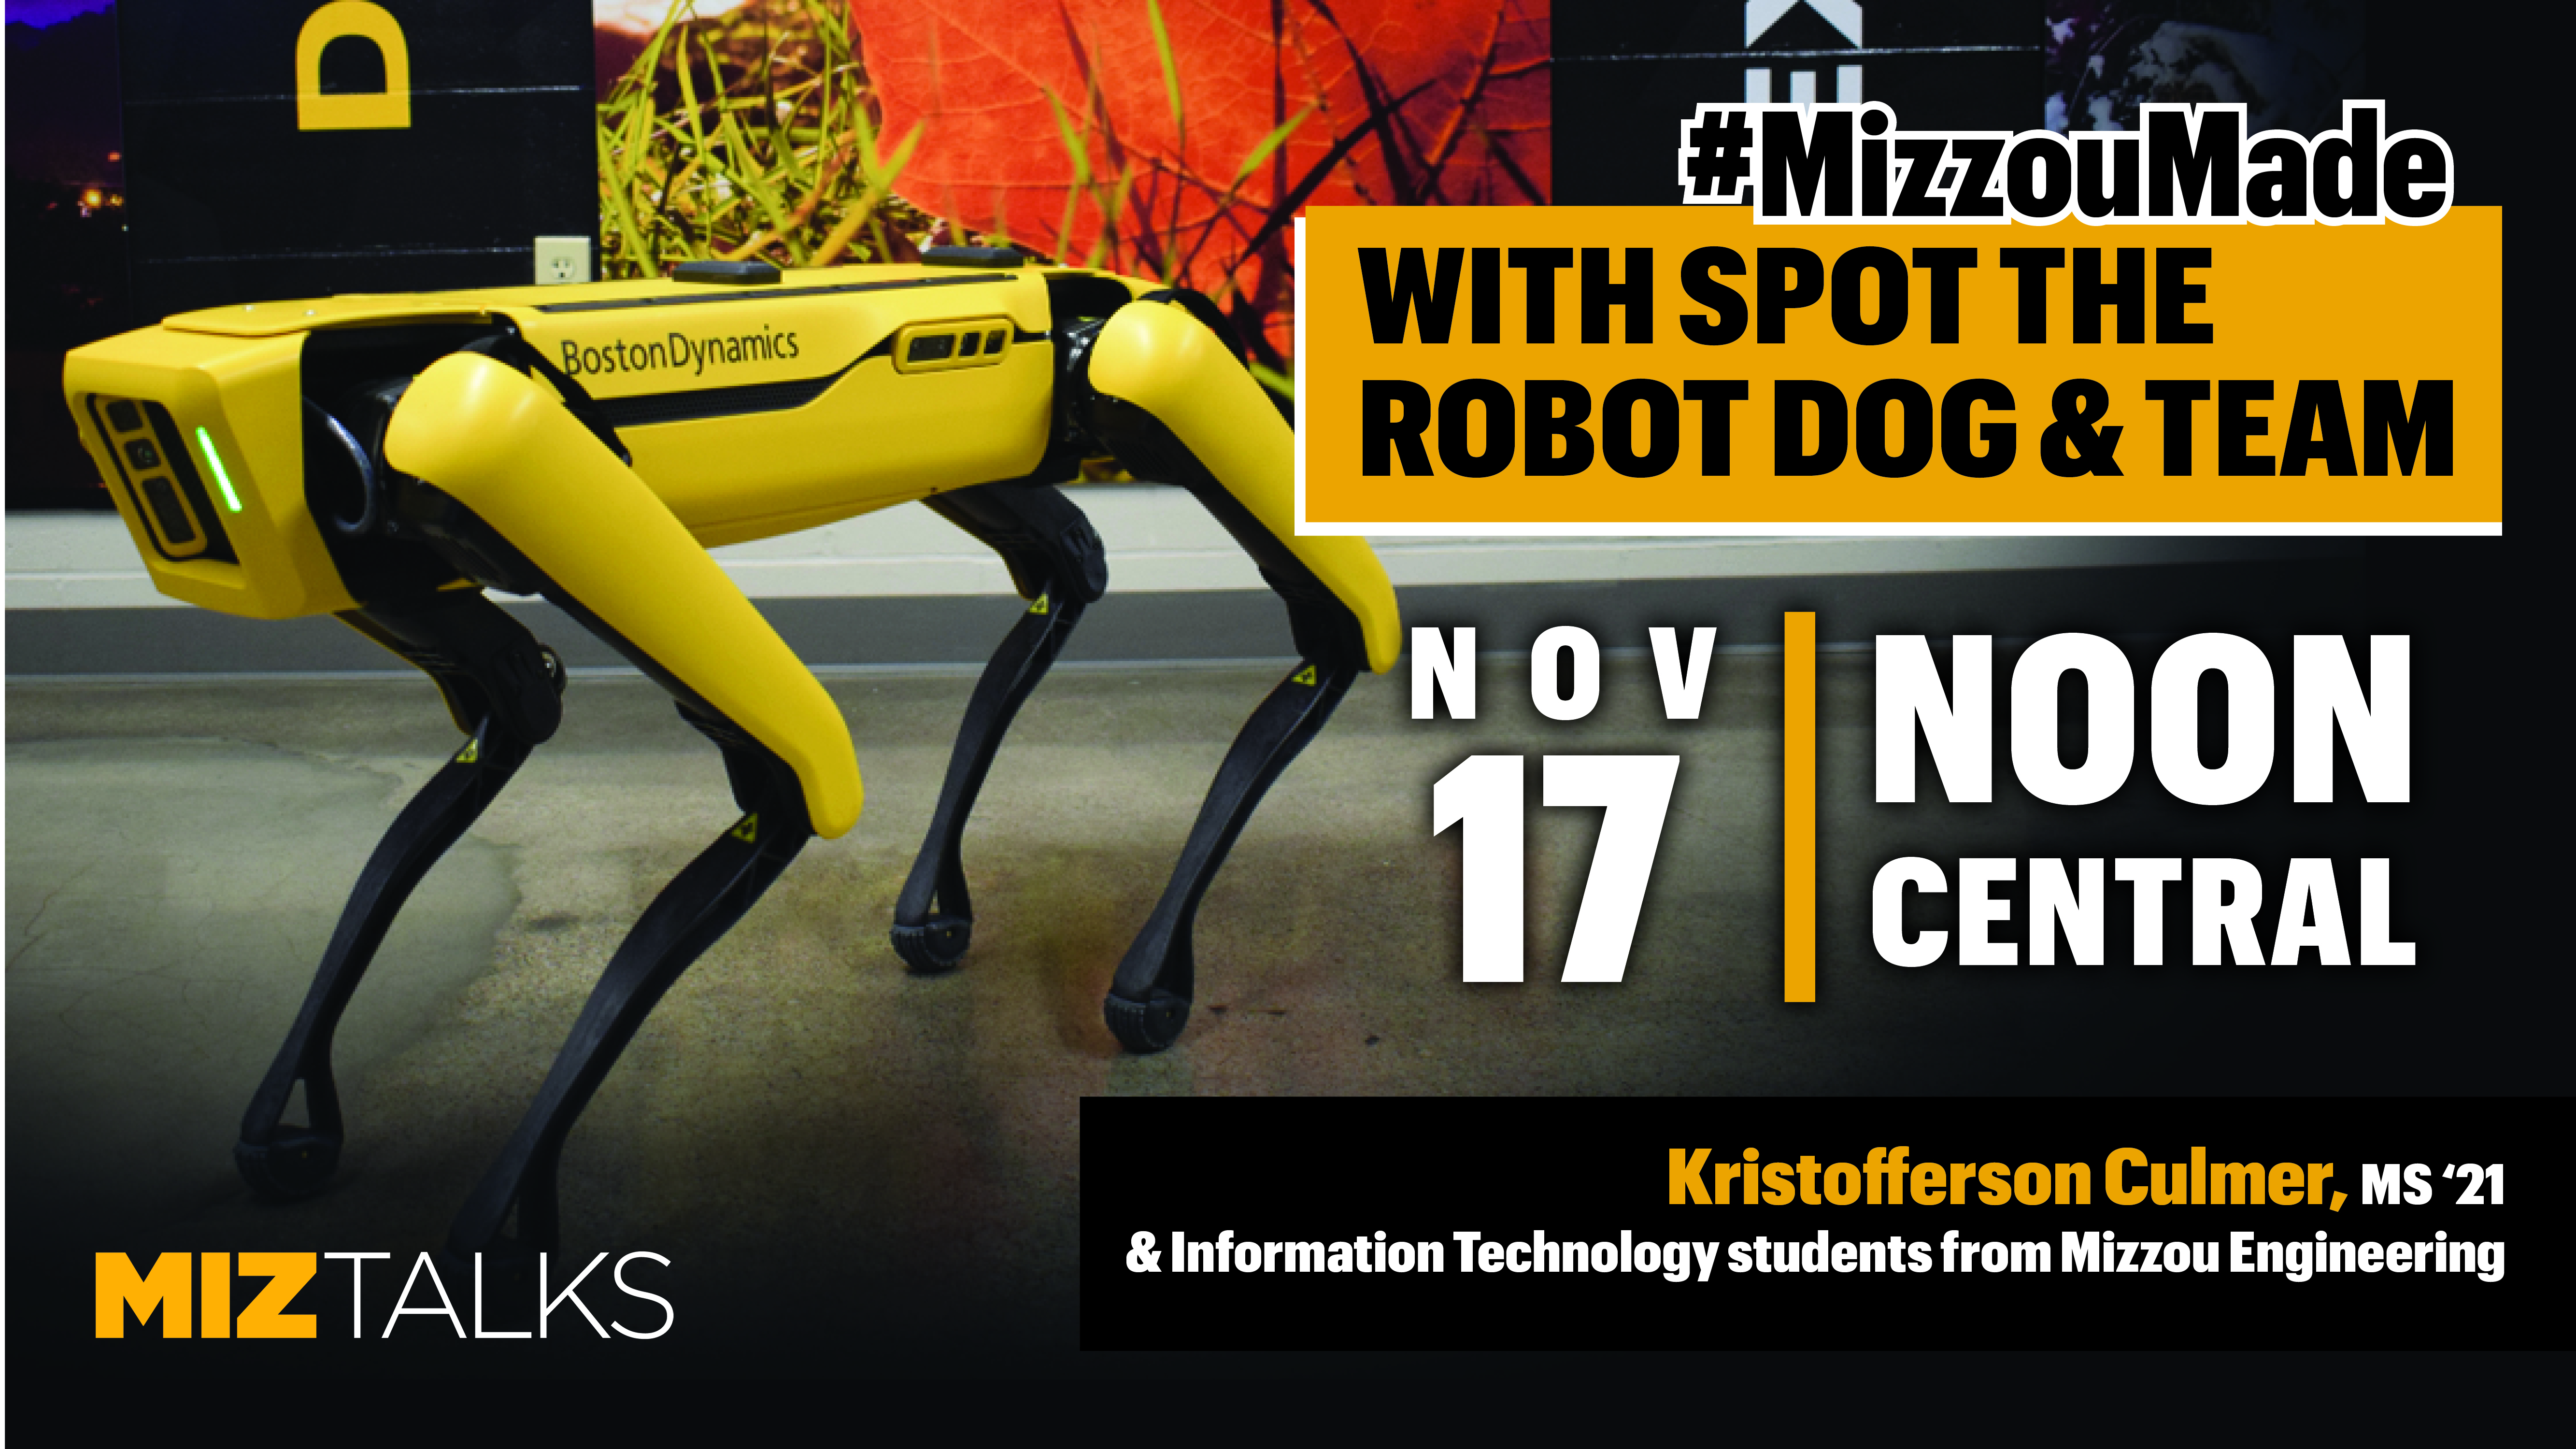 Image for #MizzouMade with Spot the Robot Dog & Team webinar